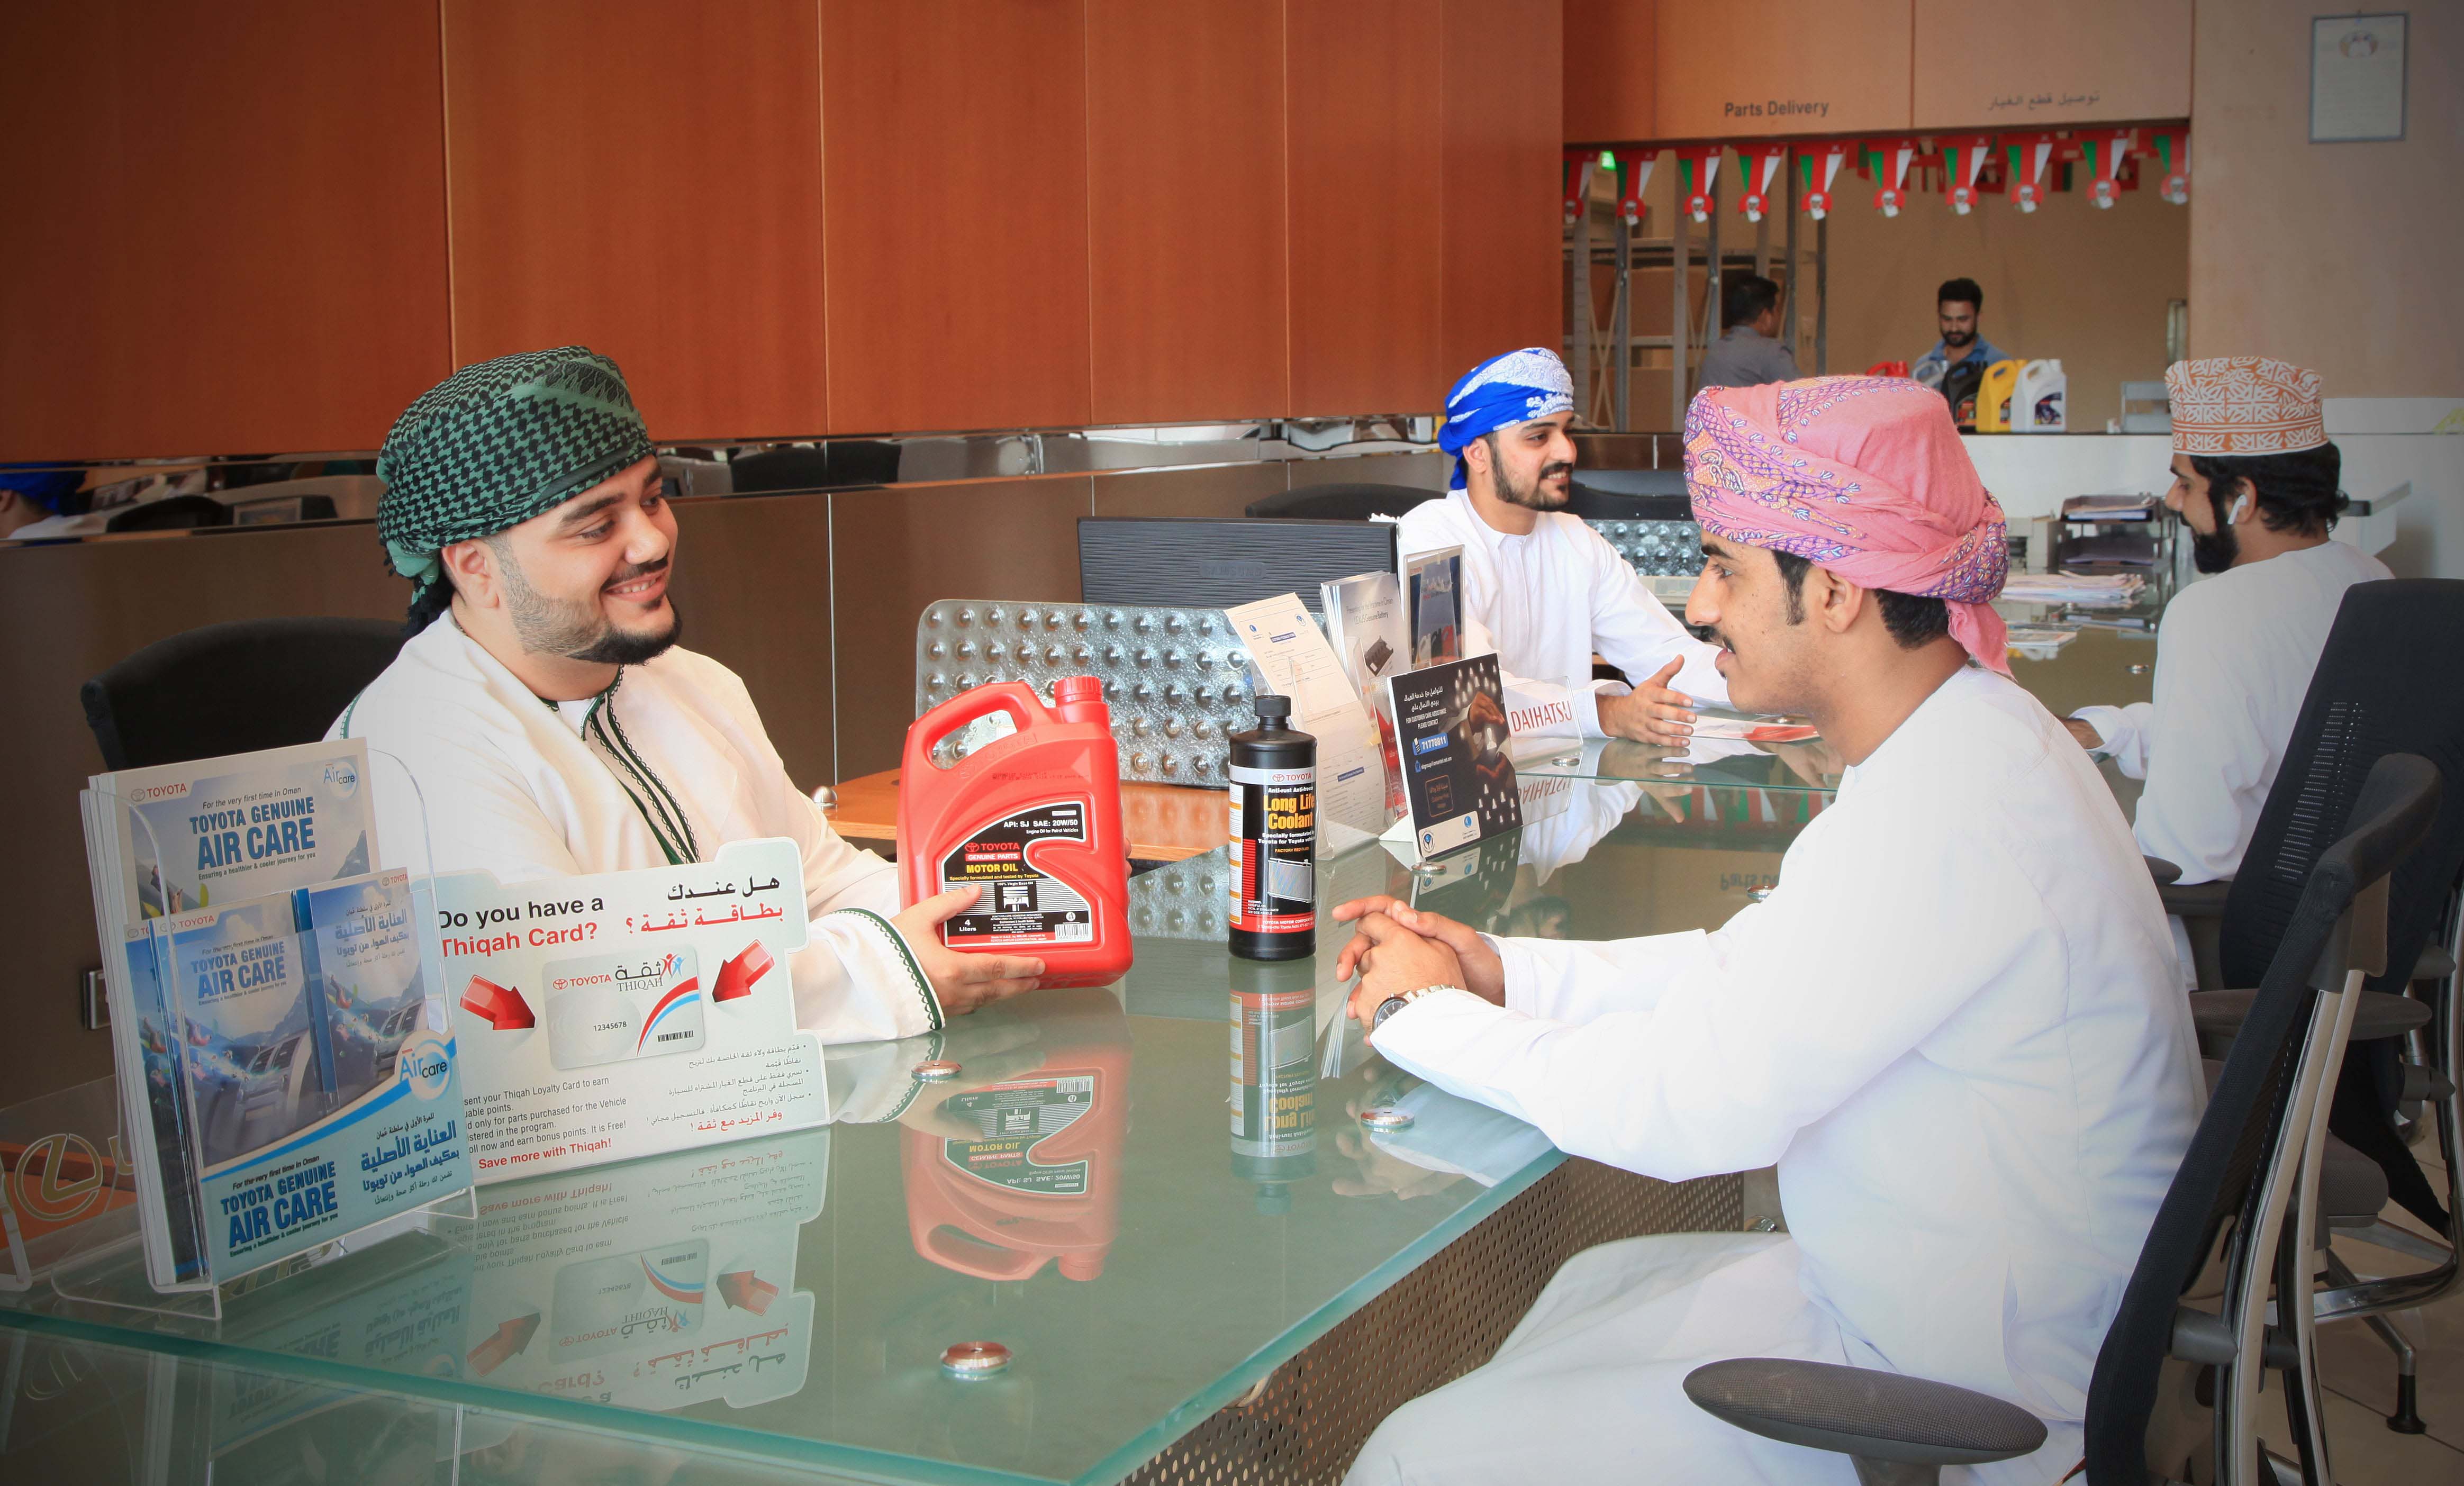 Saud bahwan's representatives interacting with customers